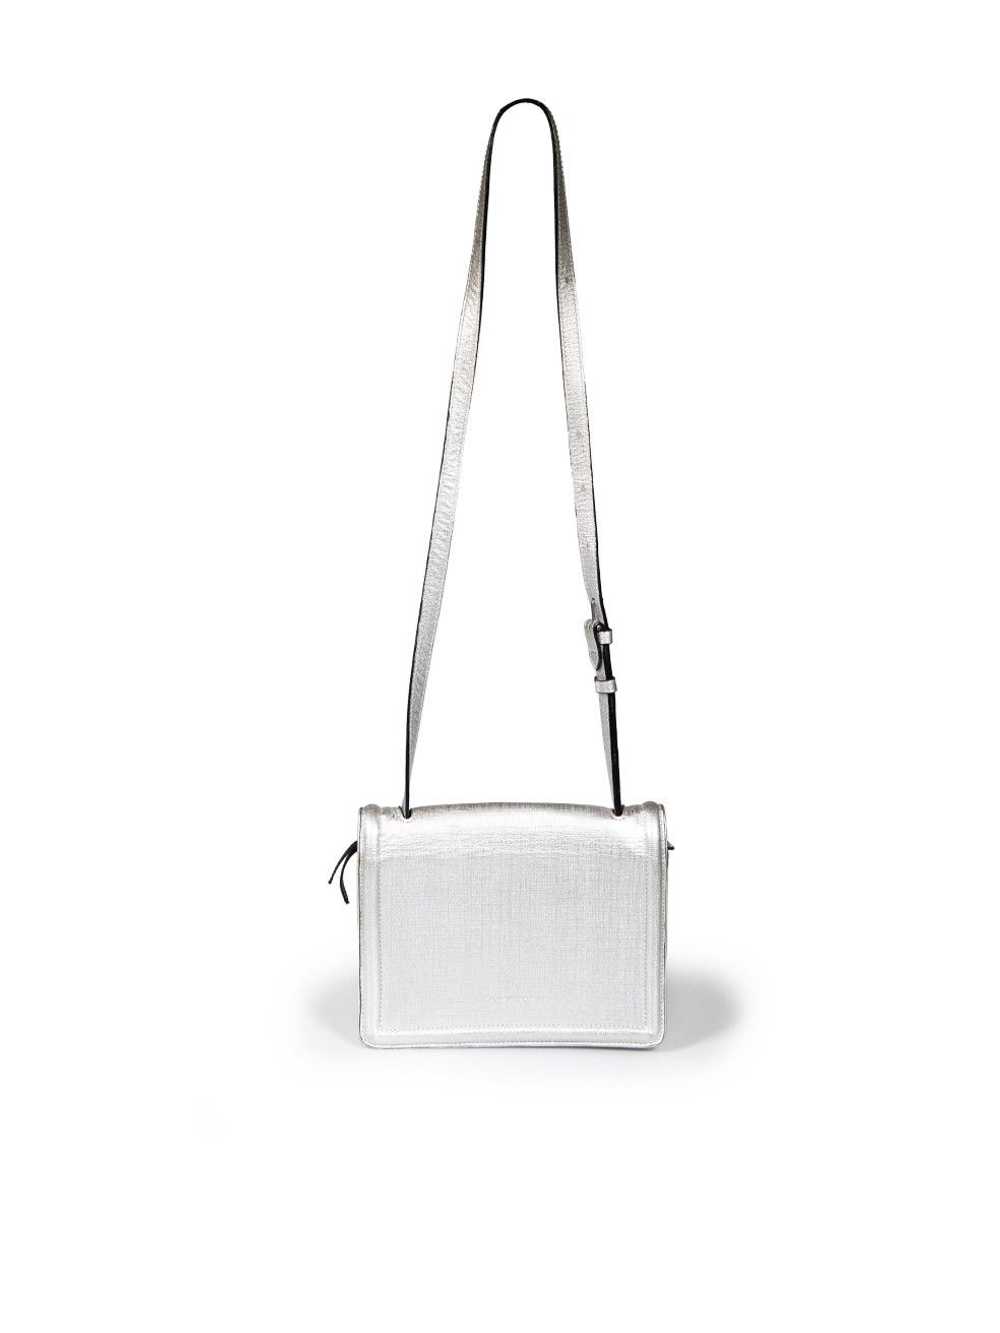 Dries Van Noten Silver Leather Flap Crossbody Bag - image 3